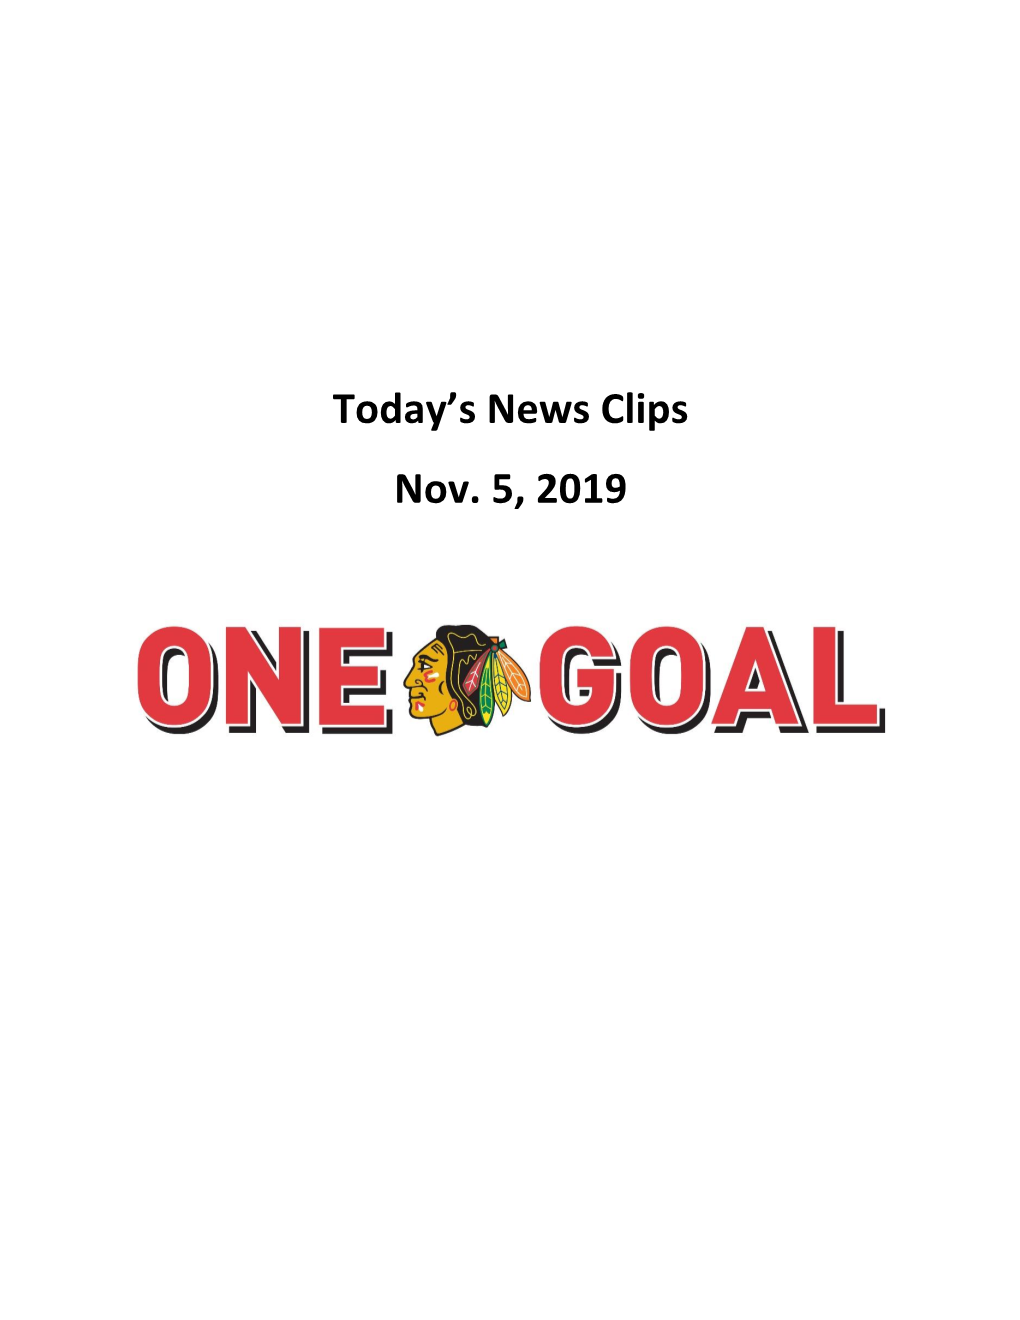 Today's News Clips Nov. 5, 2019